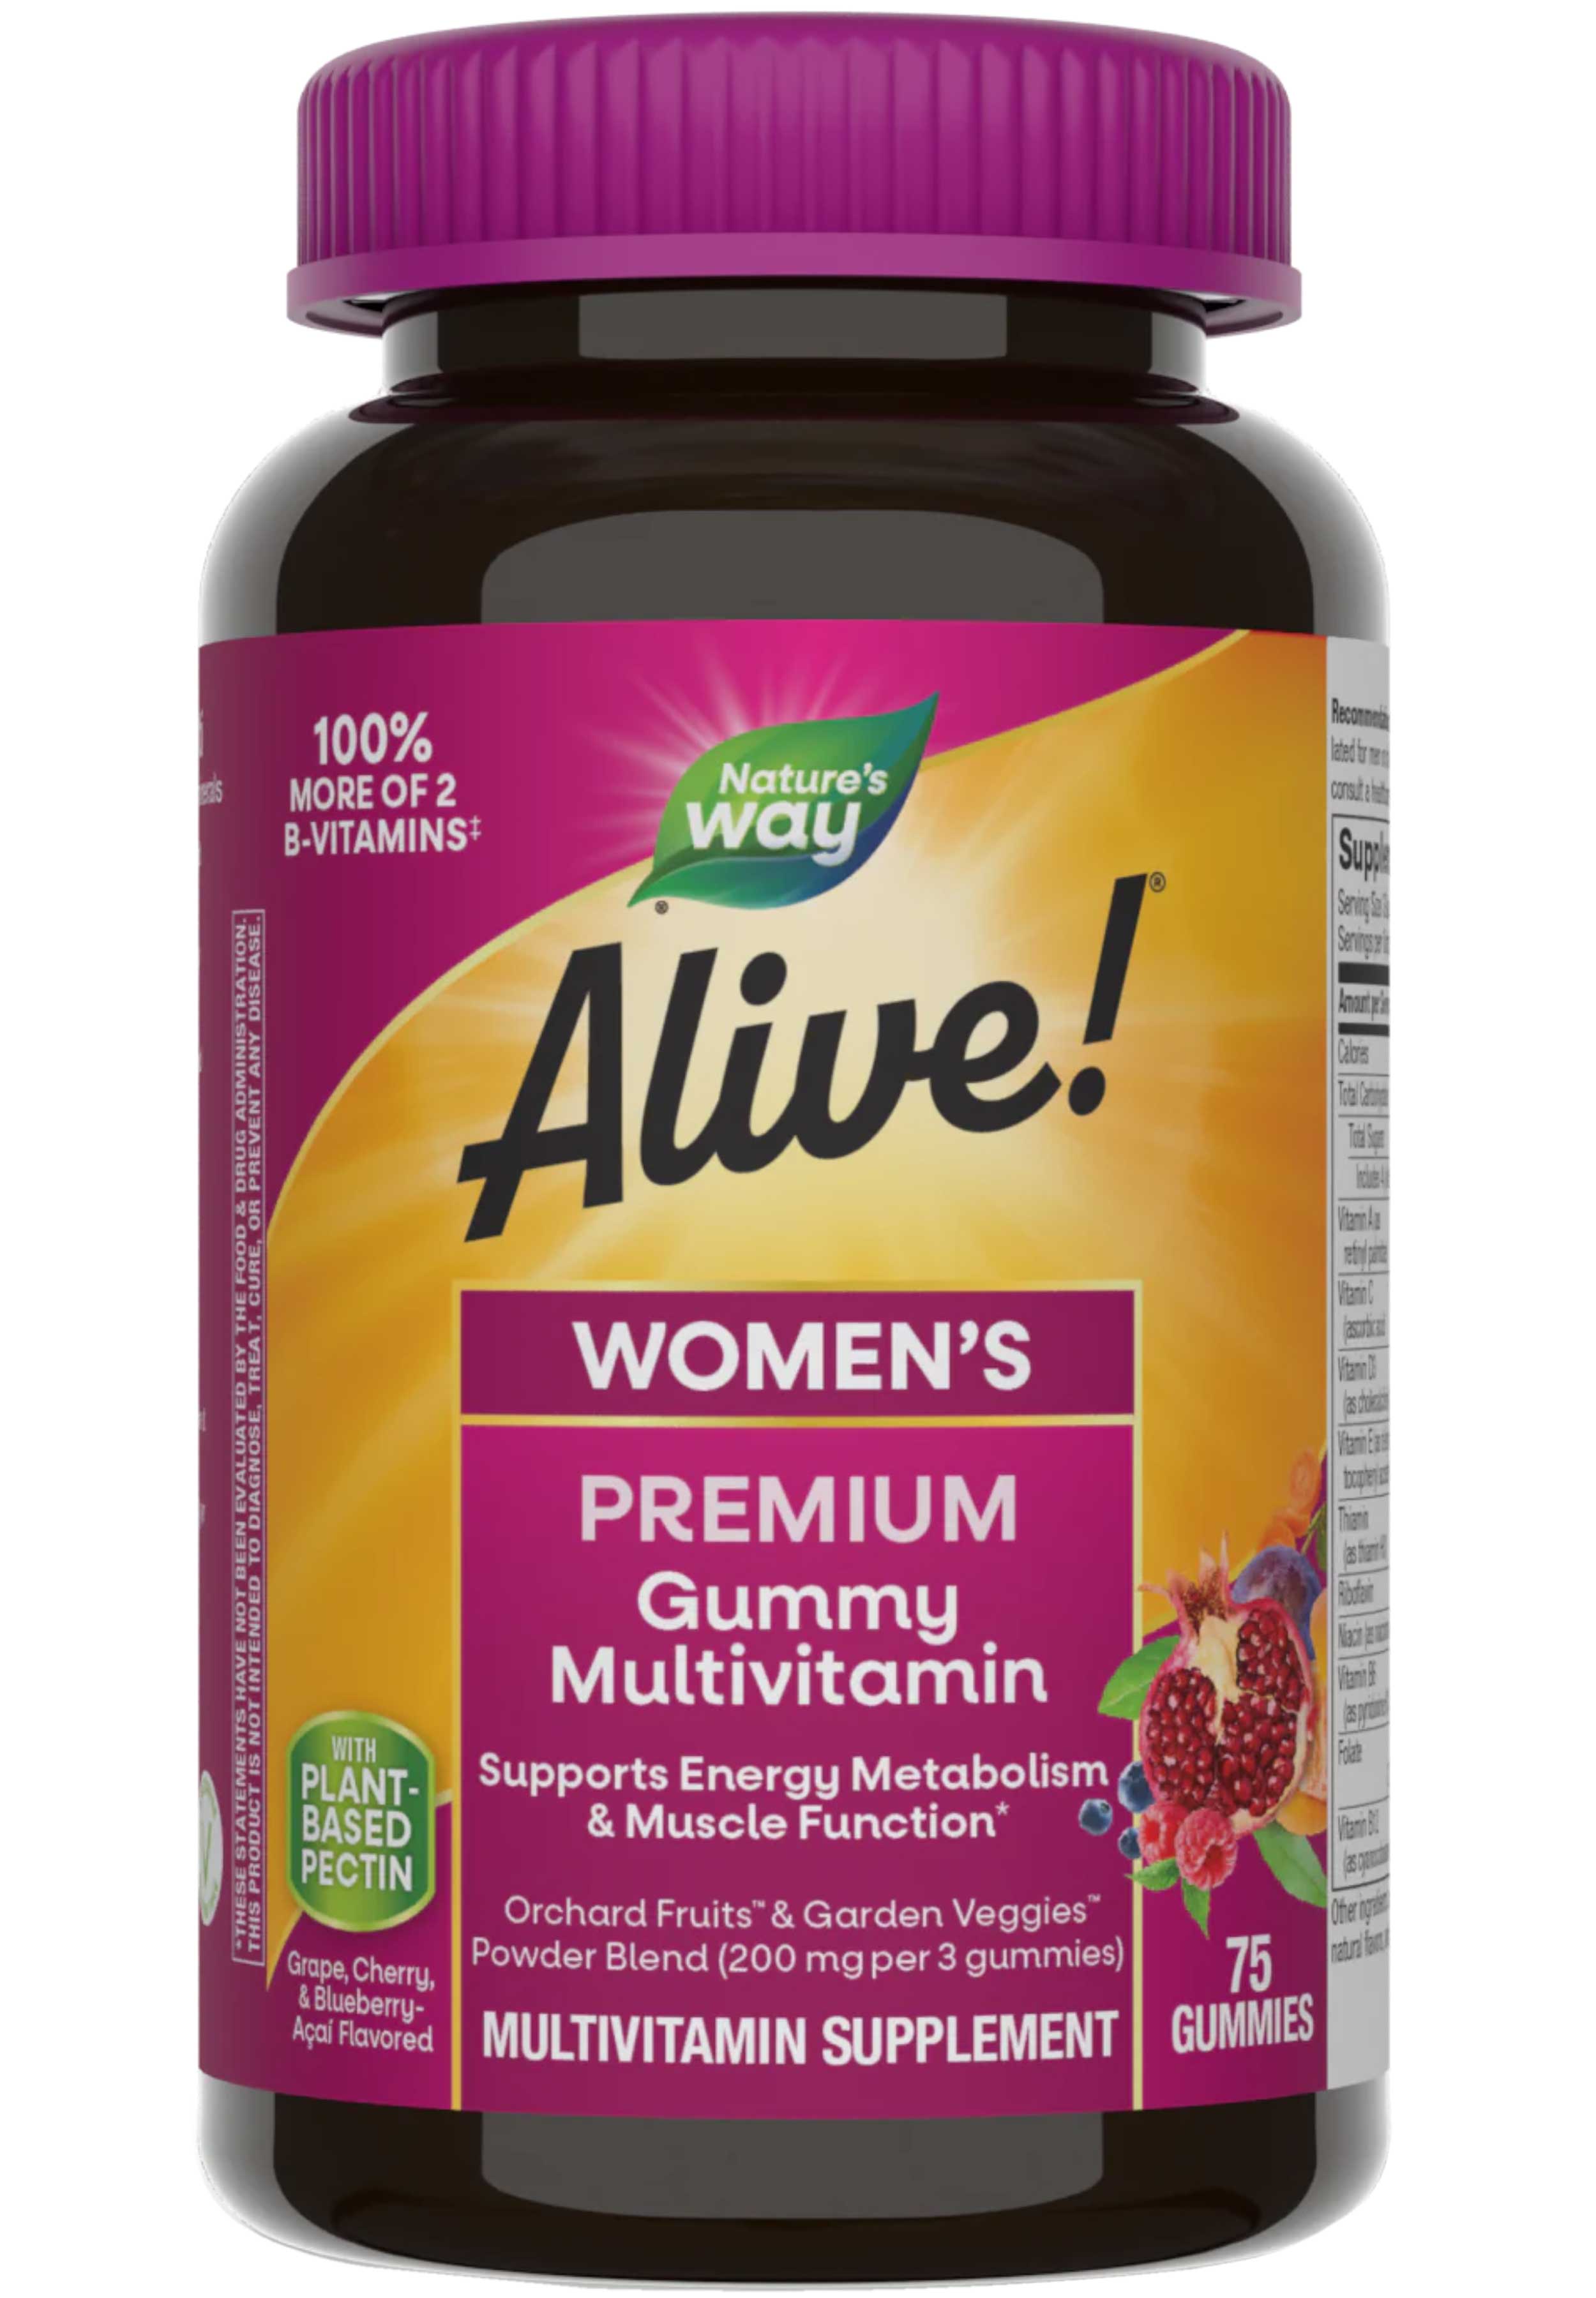 Nature's Way Alive! Women’s Premium Gummies Multivitamin